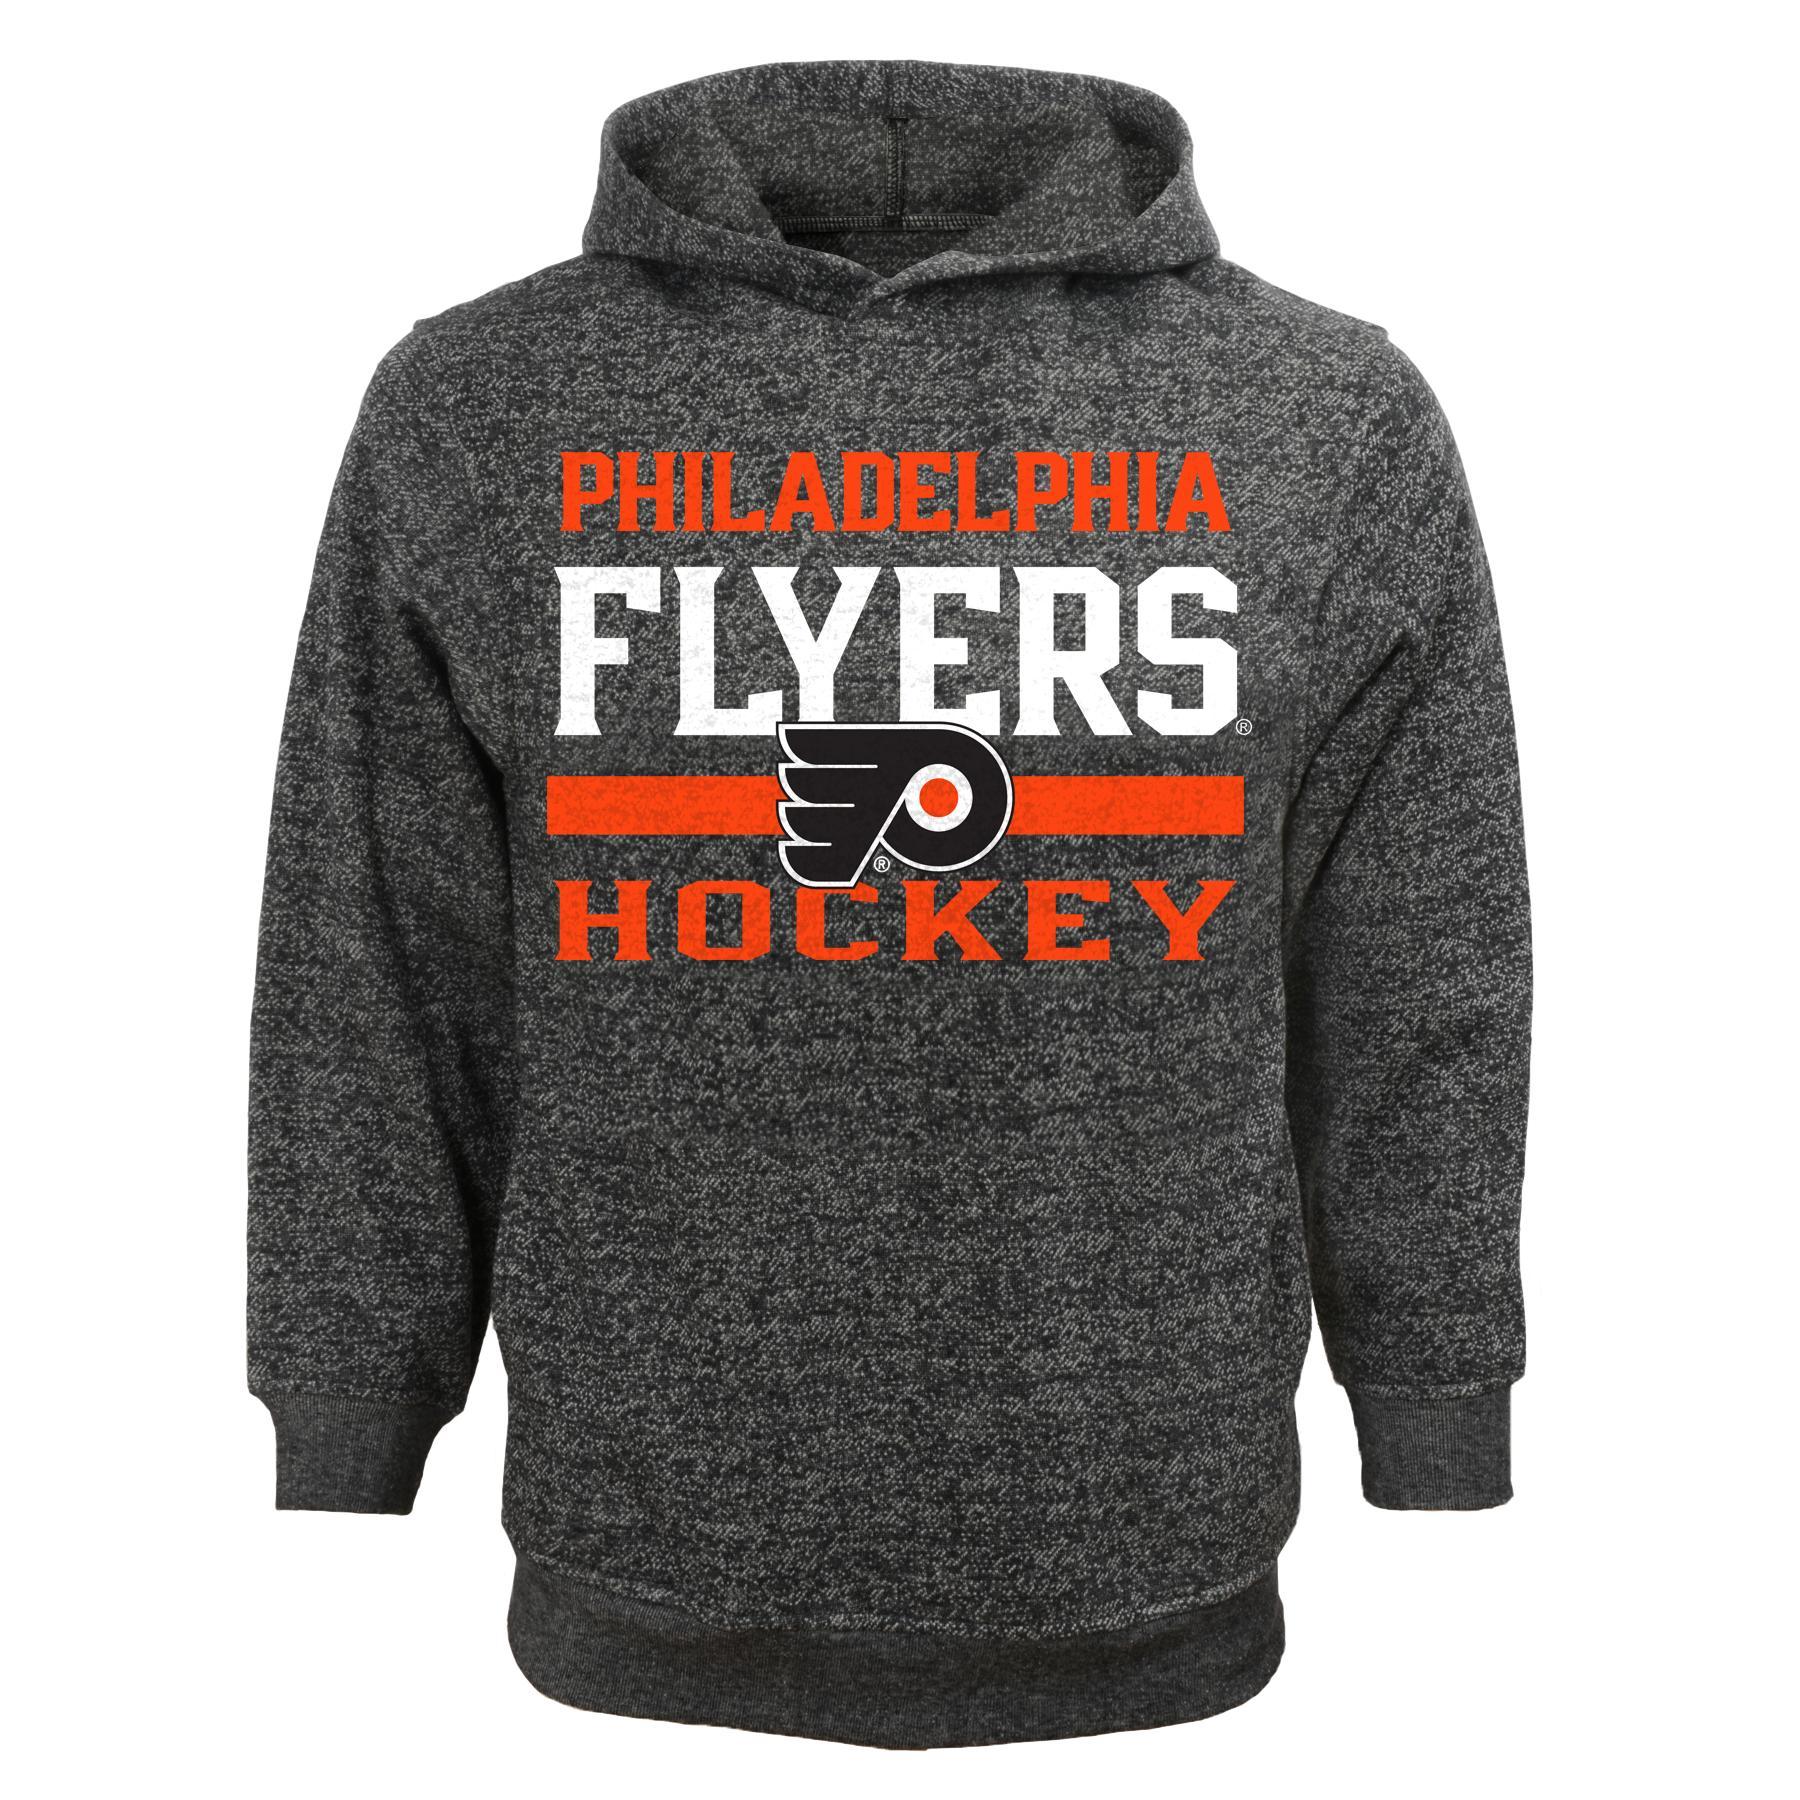 NHL Boys' Hoodie - Philadelphia Flyers